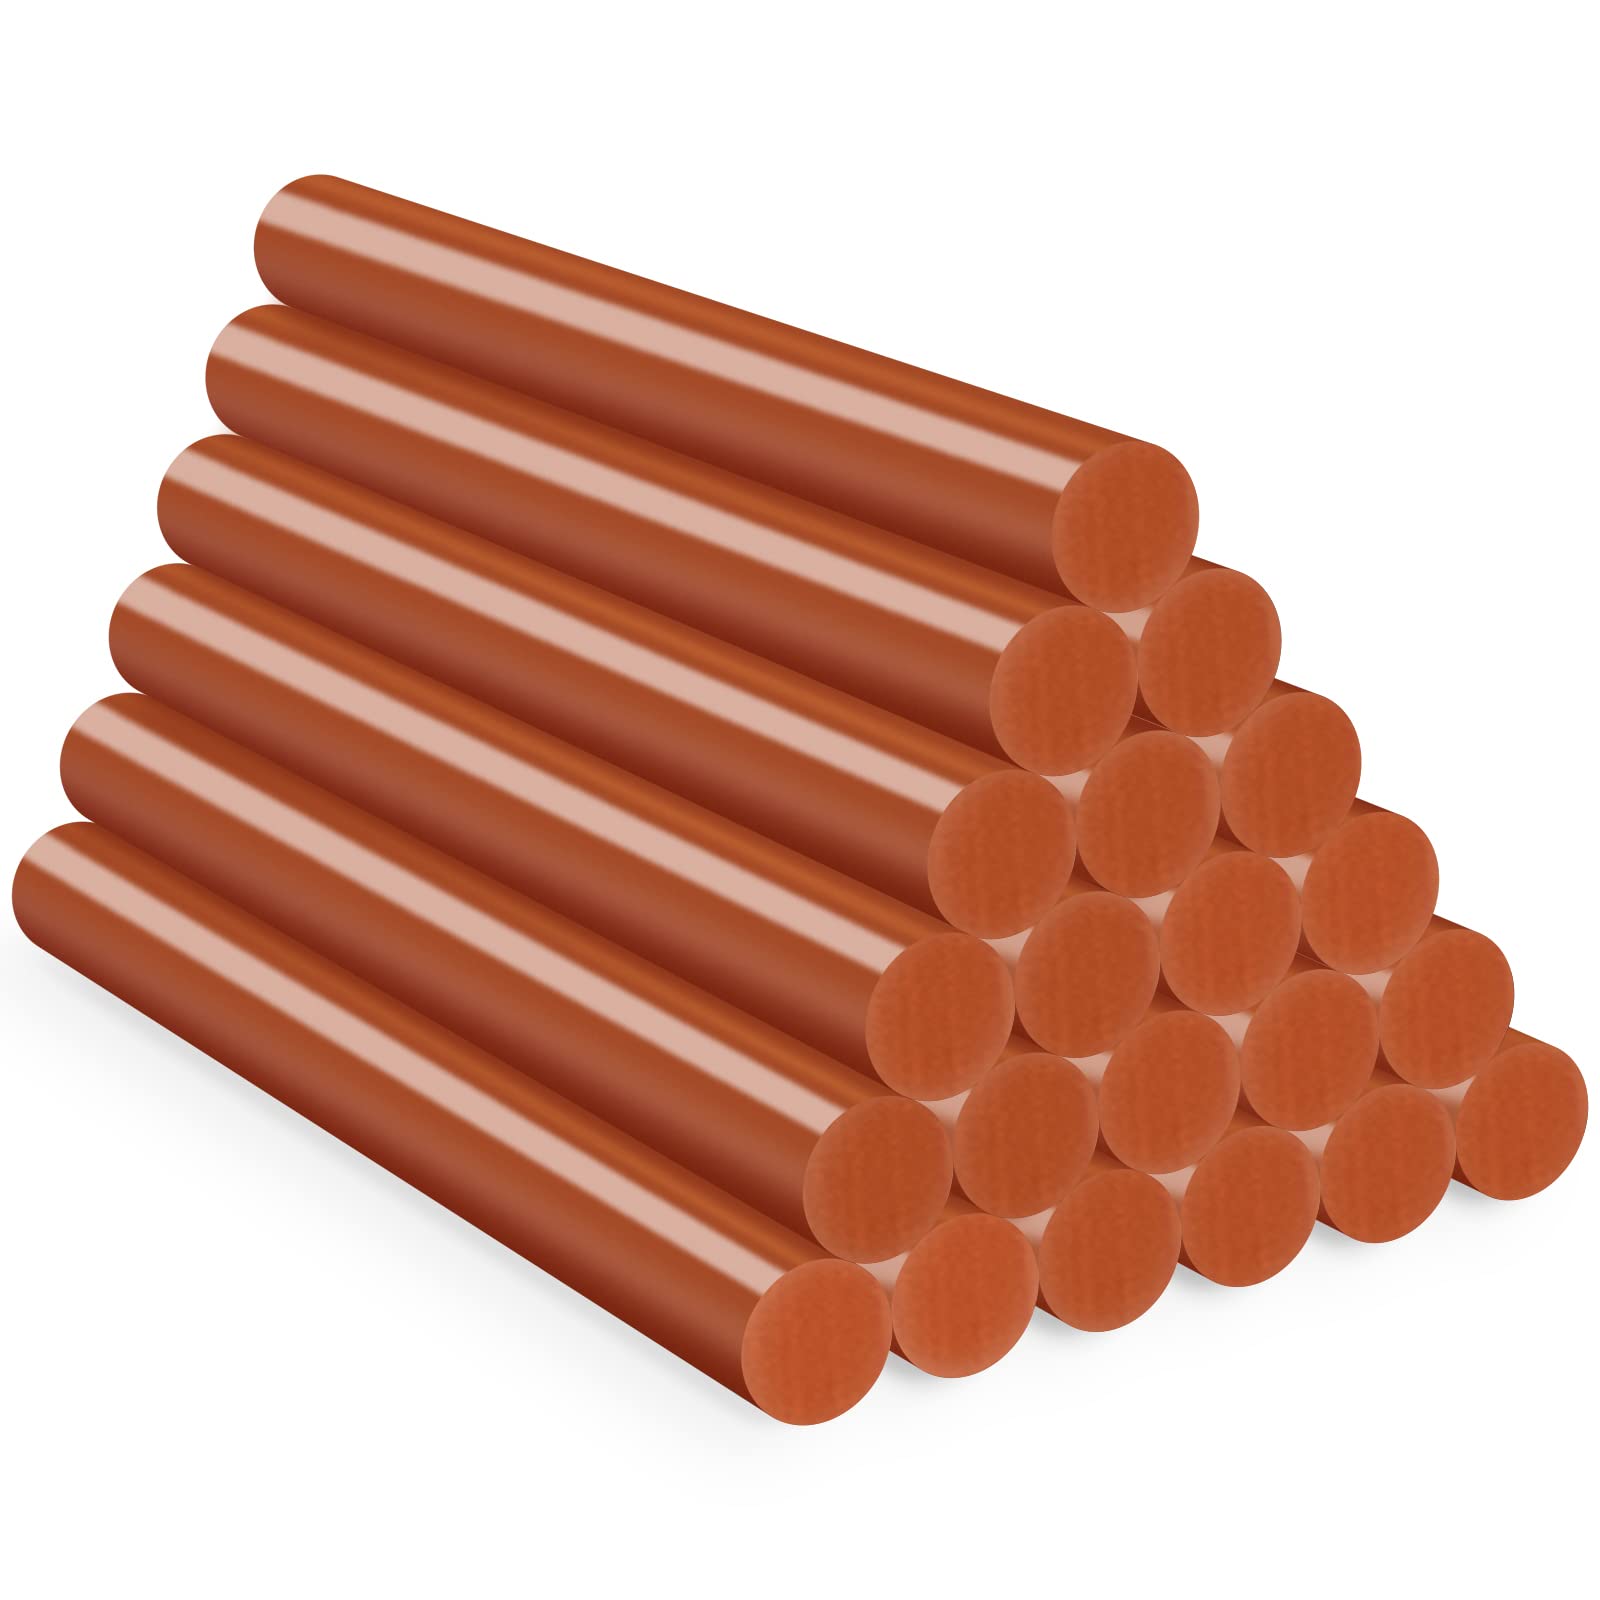 Brown Hot Glue Sticks Full Size, ENPOINT 4 Long x 0.43 Dia Hot Melt Glue  Sticks Colored Bulk, 24 PCS All Temp Adhesive Glue Sticks for Crafting,  Decoration, Art, DIY, School Projects